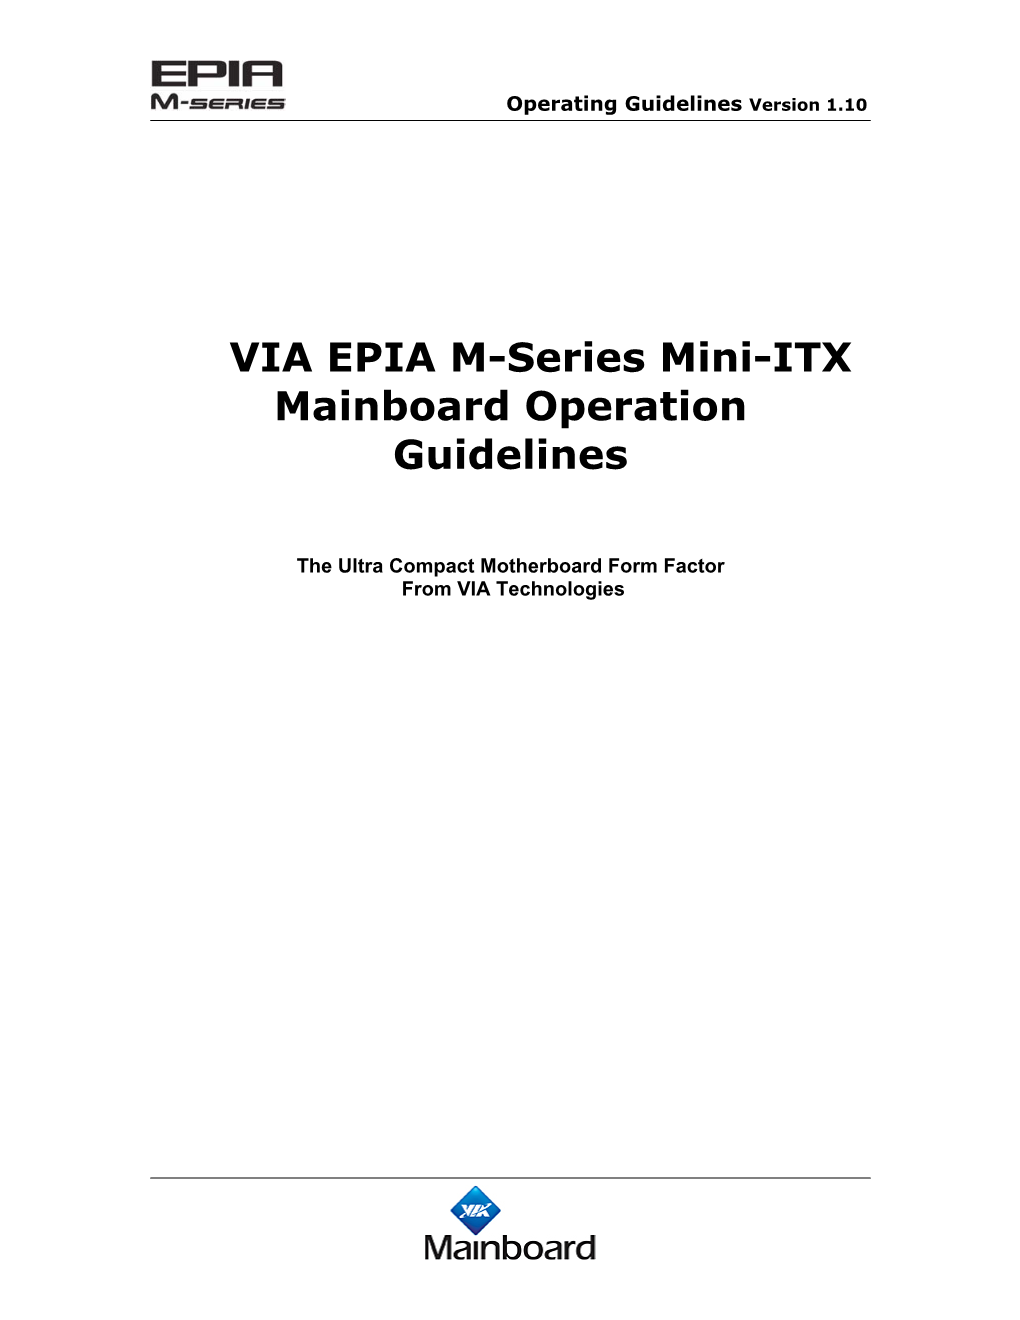 VIA EPIA M-Series Mini-ITX Mainboard Operation Guidelines